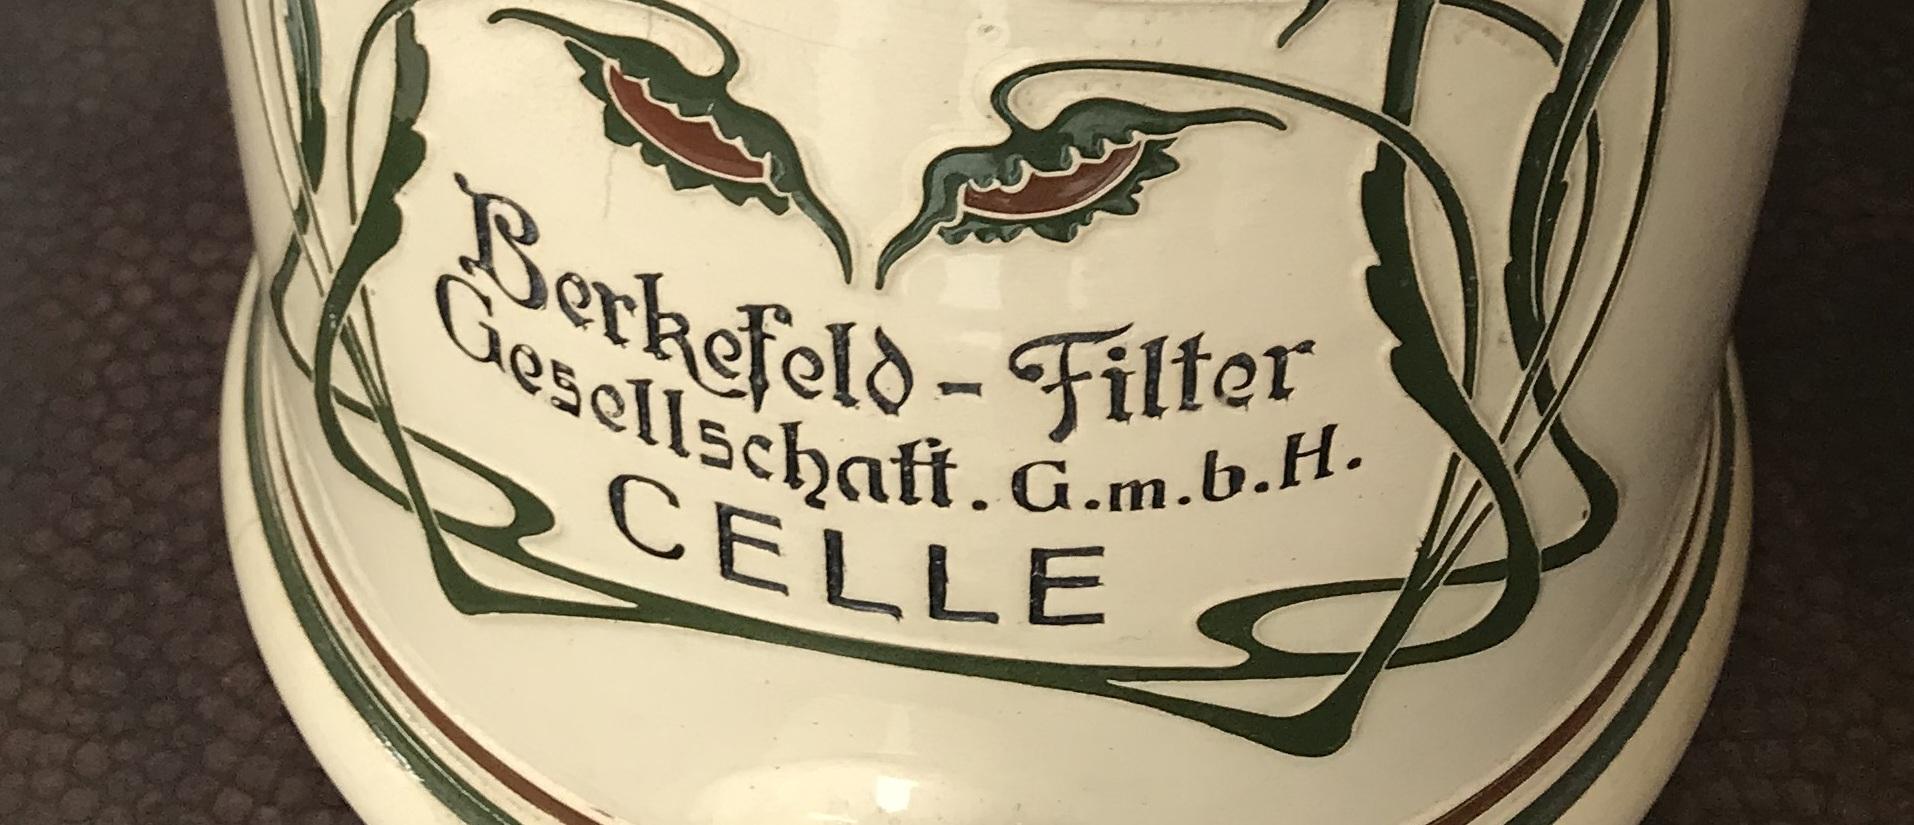 Early 20th Century Berkefeld Filter Gesellschaft G.M.B.H Ce, Jugendstil, Art Nouveau, Liberty, 1900 For Sale